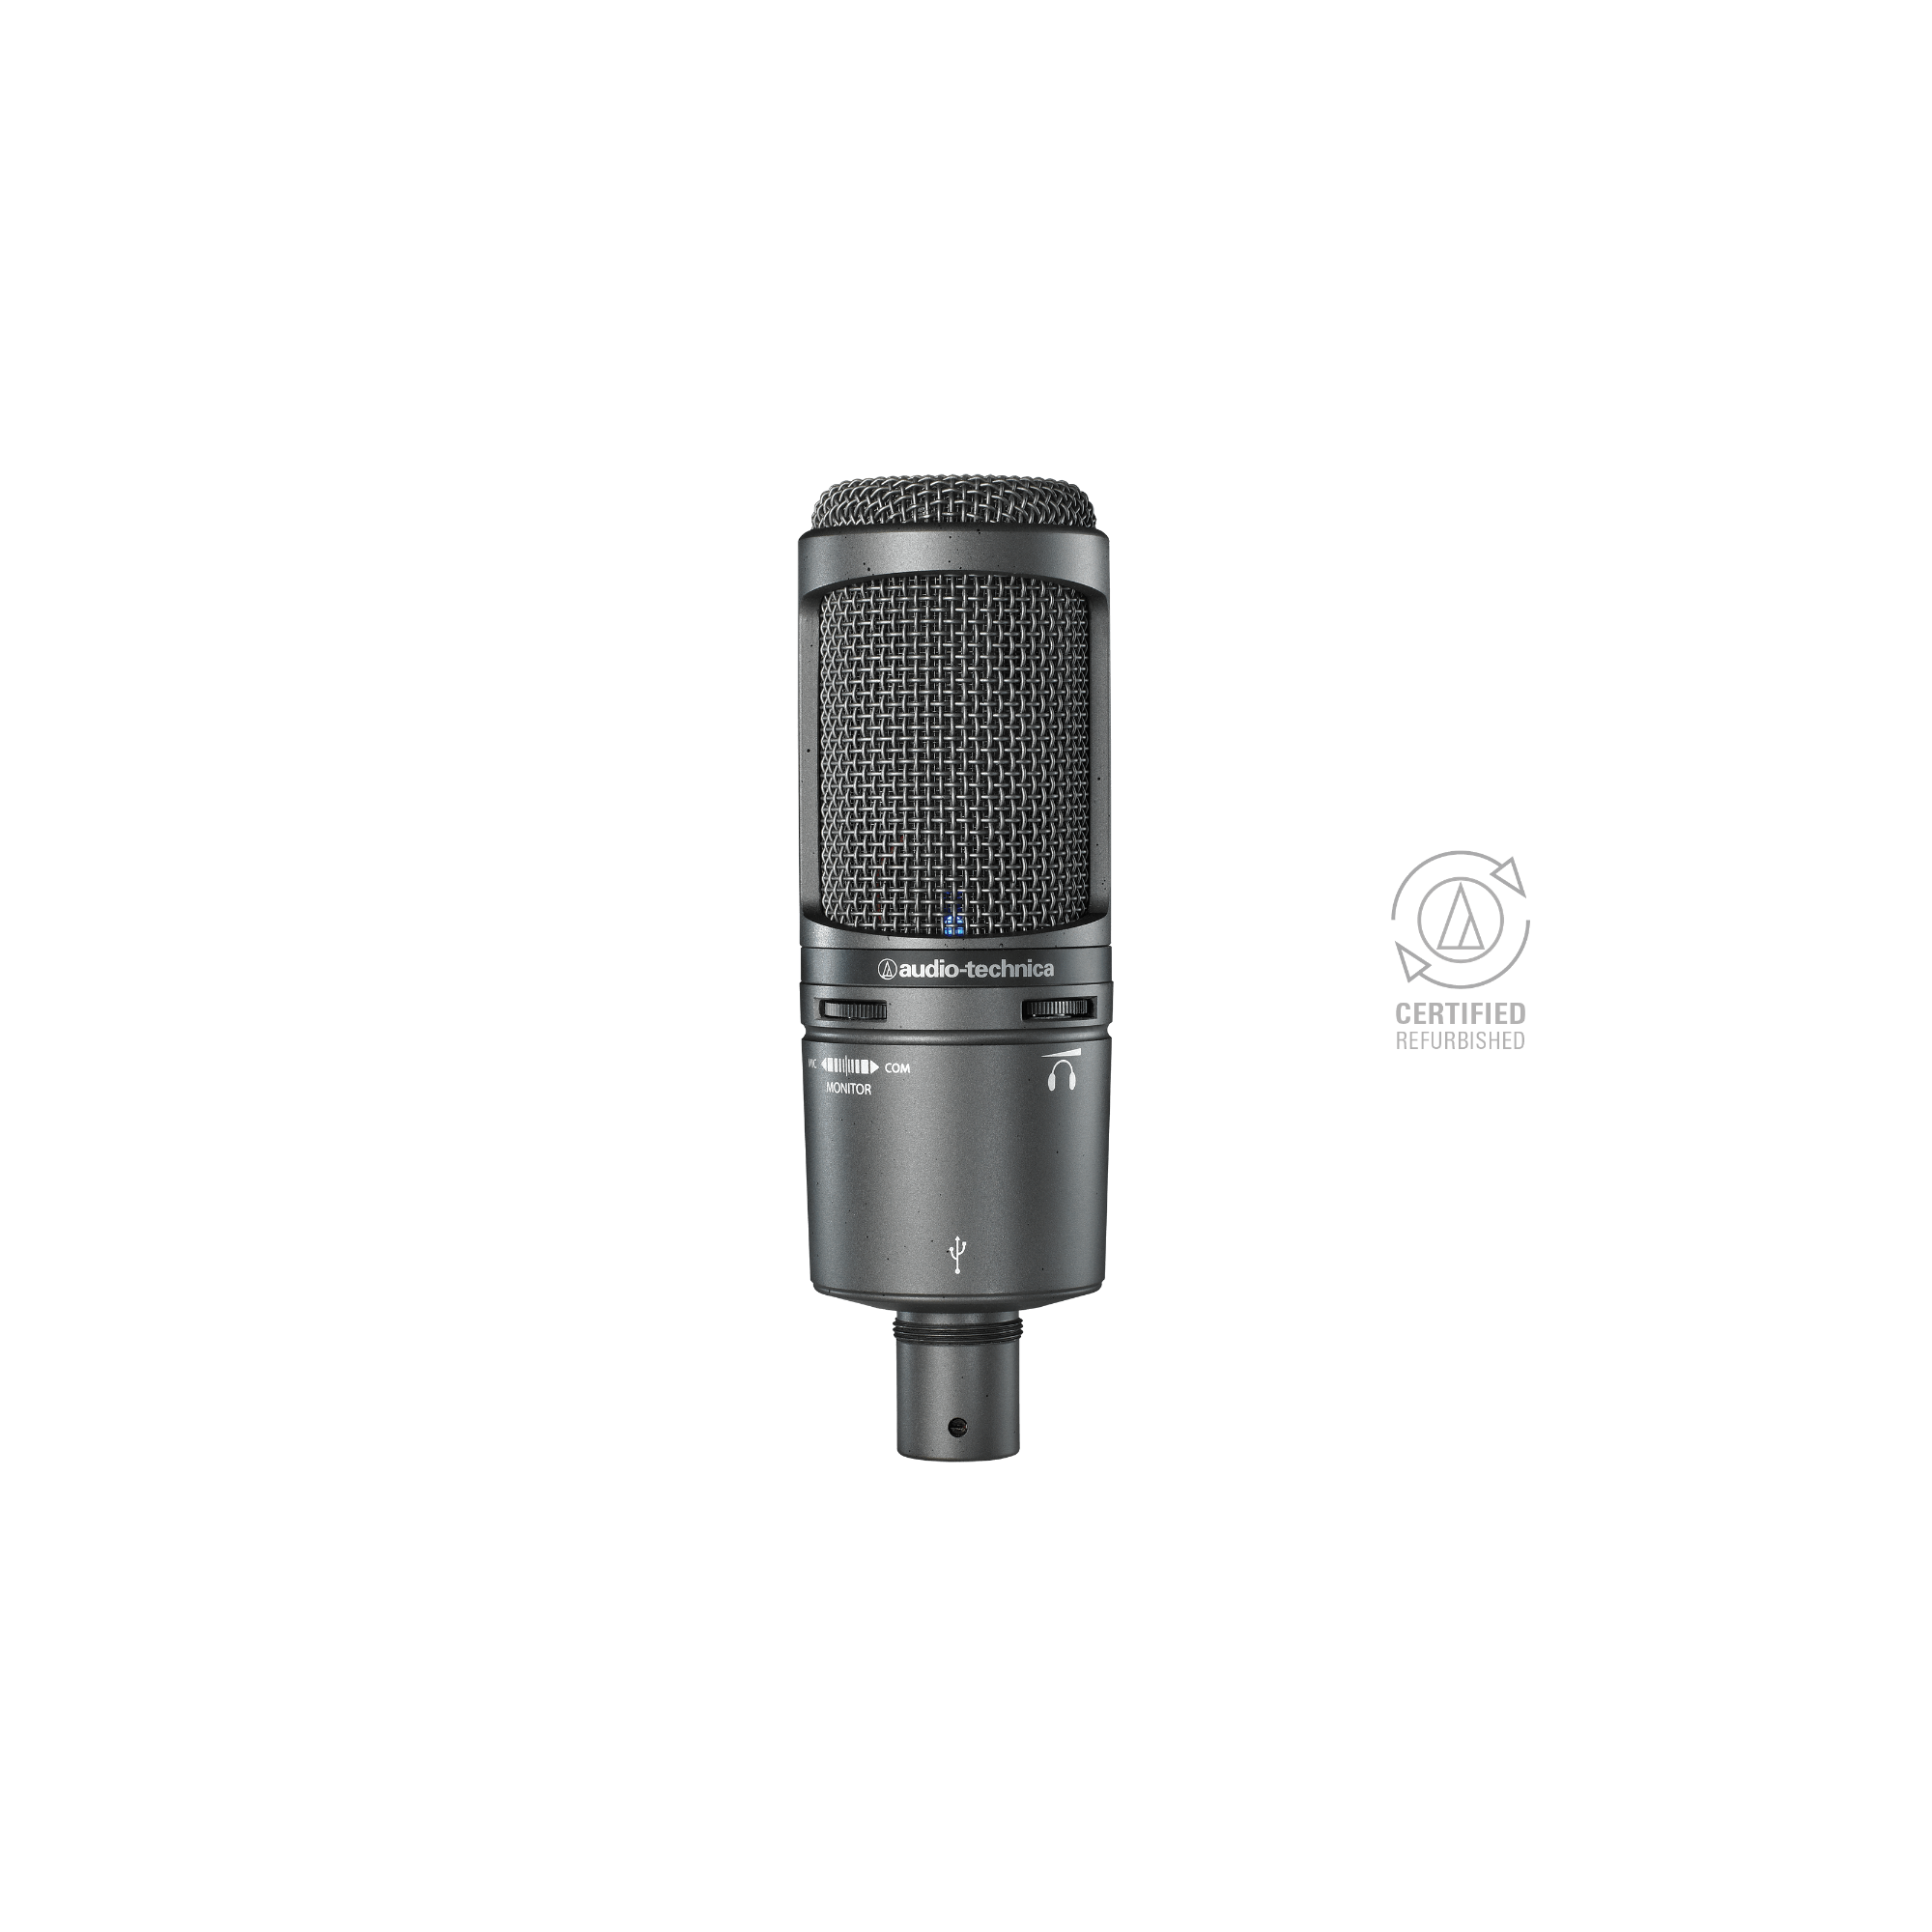 USB Cardioid Condenser Microphone, AT2020USB+, Audio-Technica